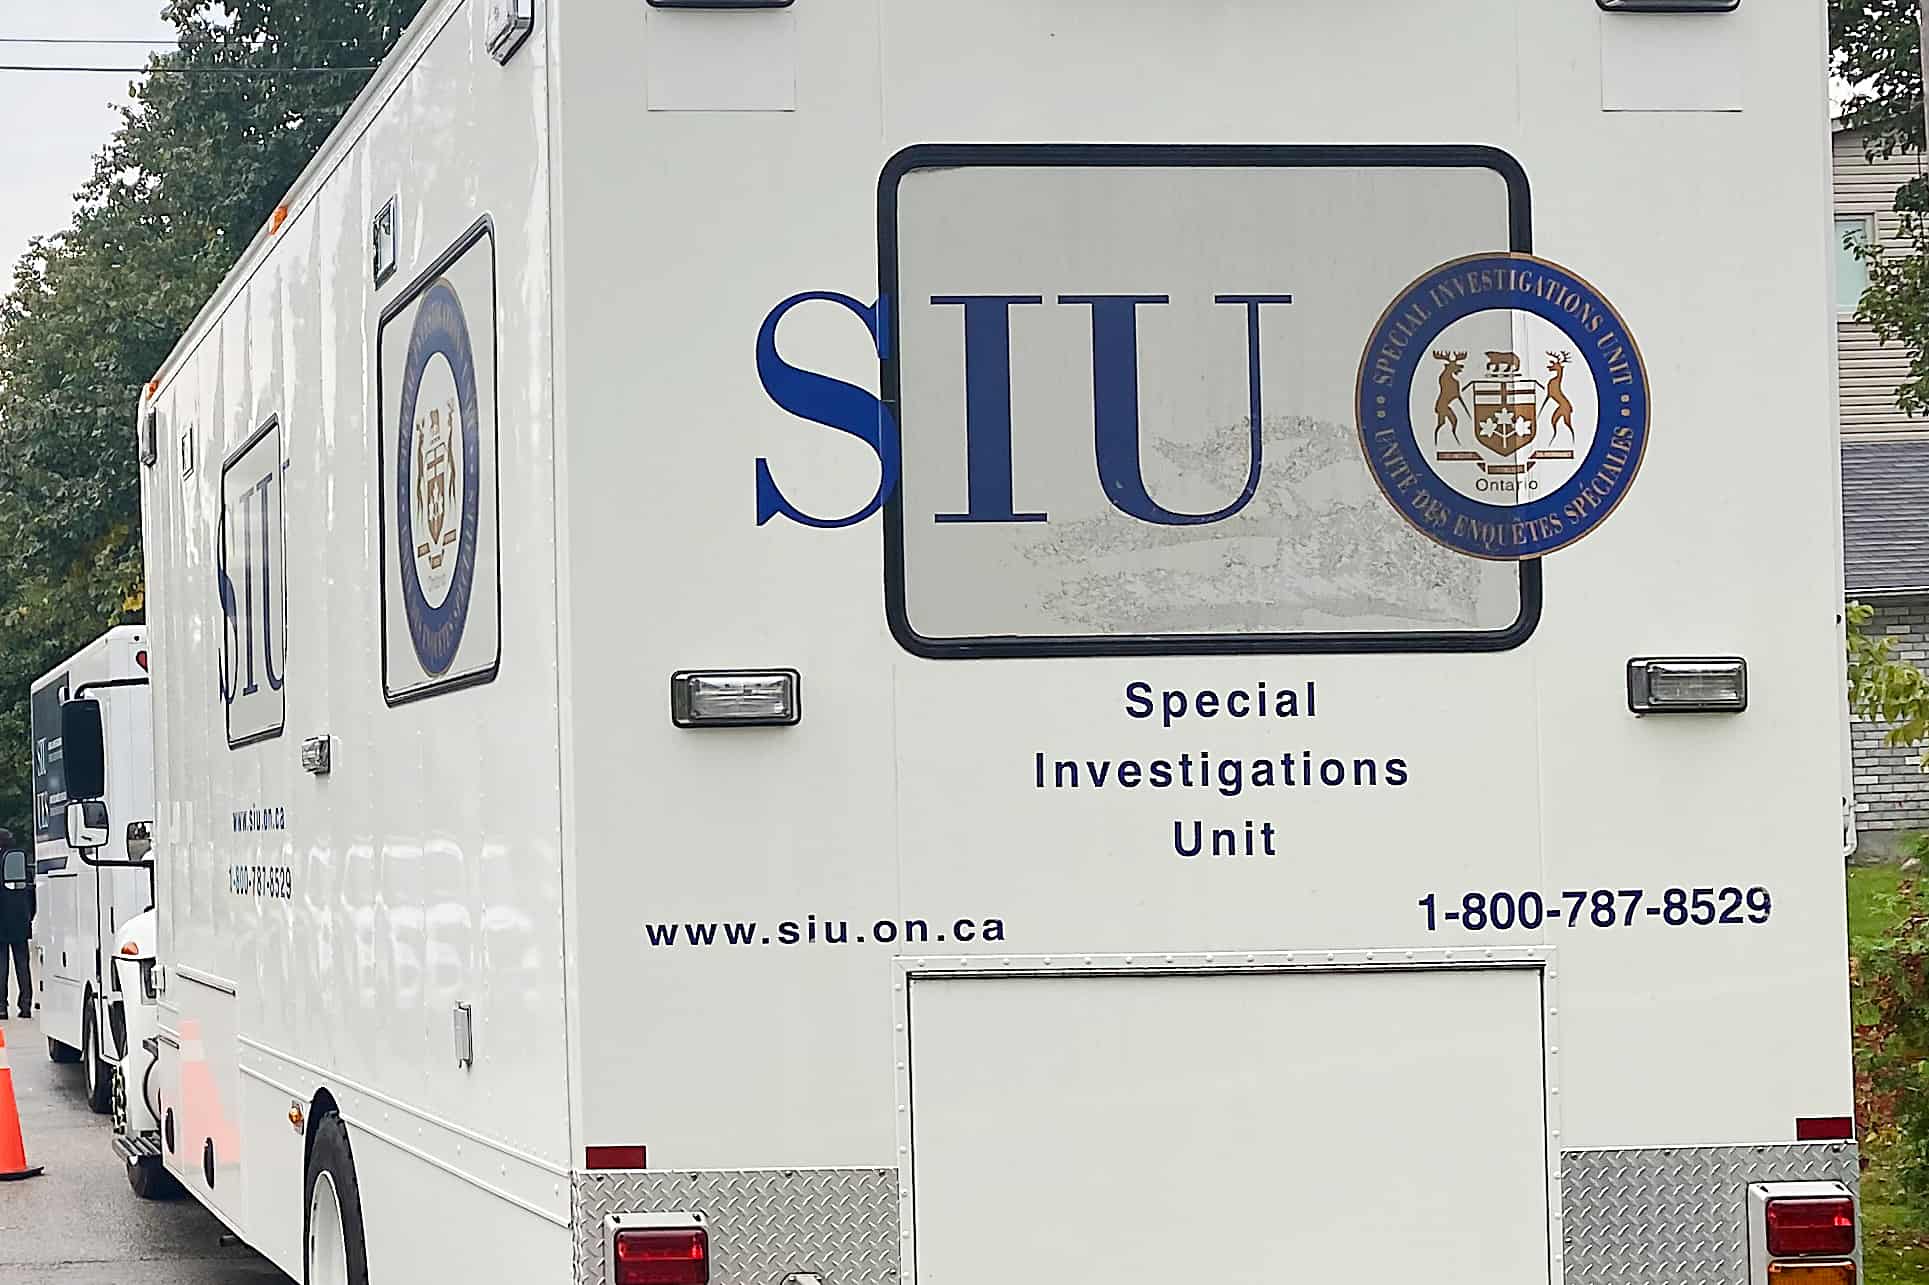 siu calls off investigation into burlington crash that killed one man